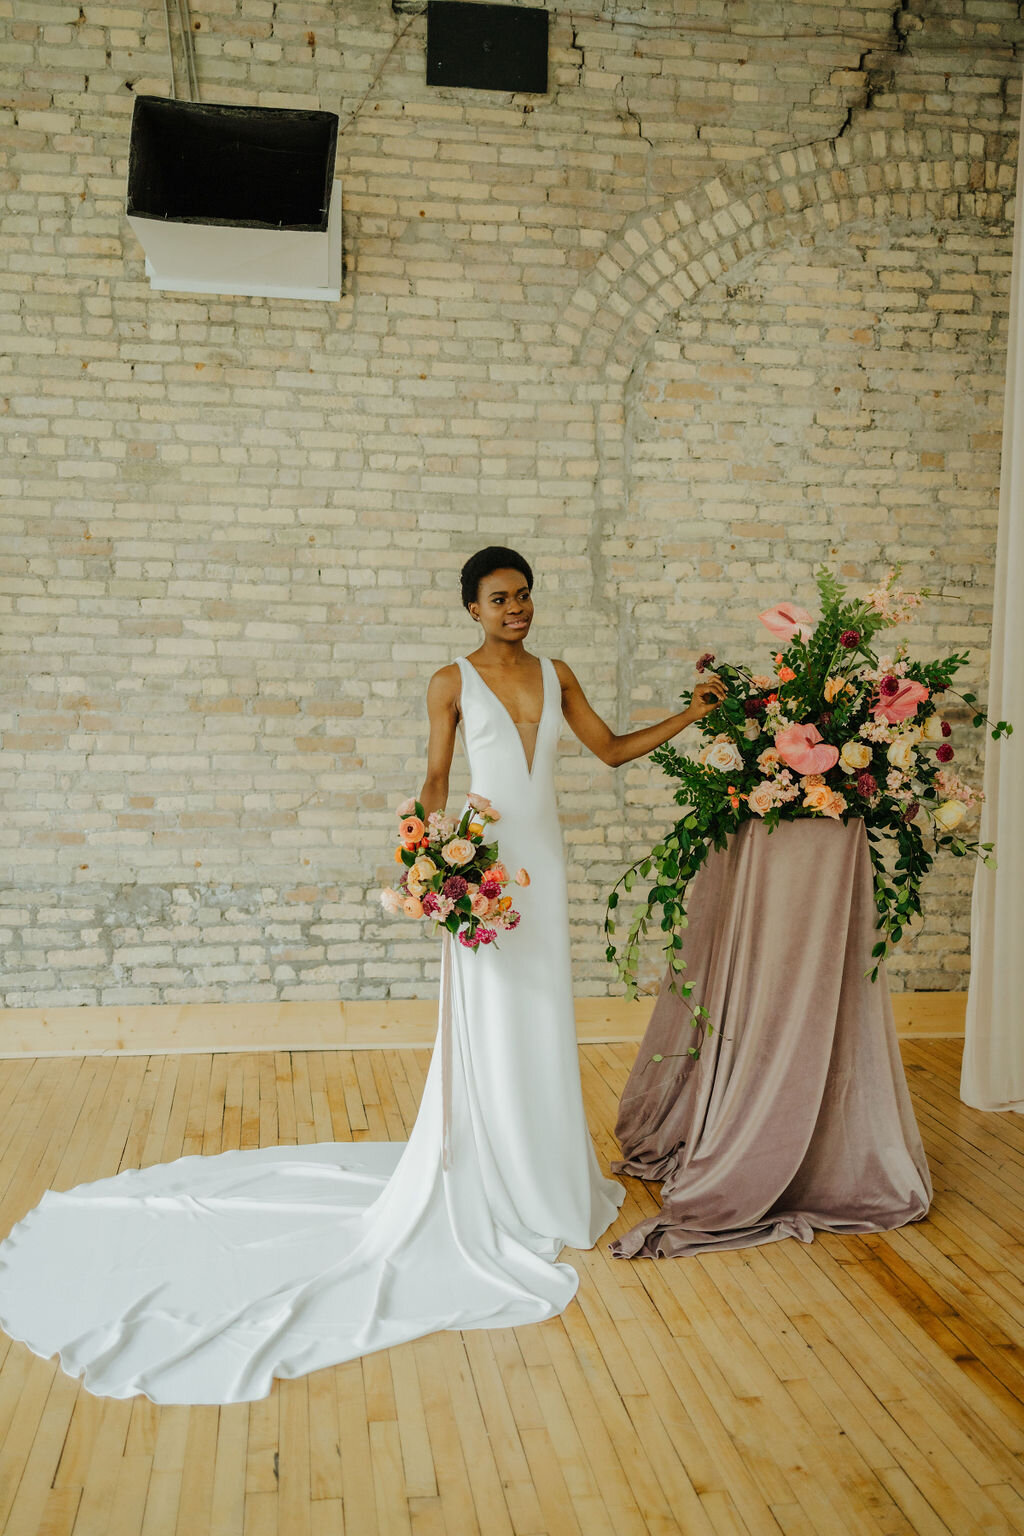 Best Wedding Venues in Winnipeg - Unique Weddings Winnipeg